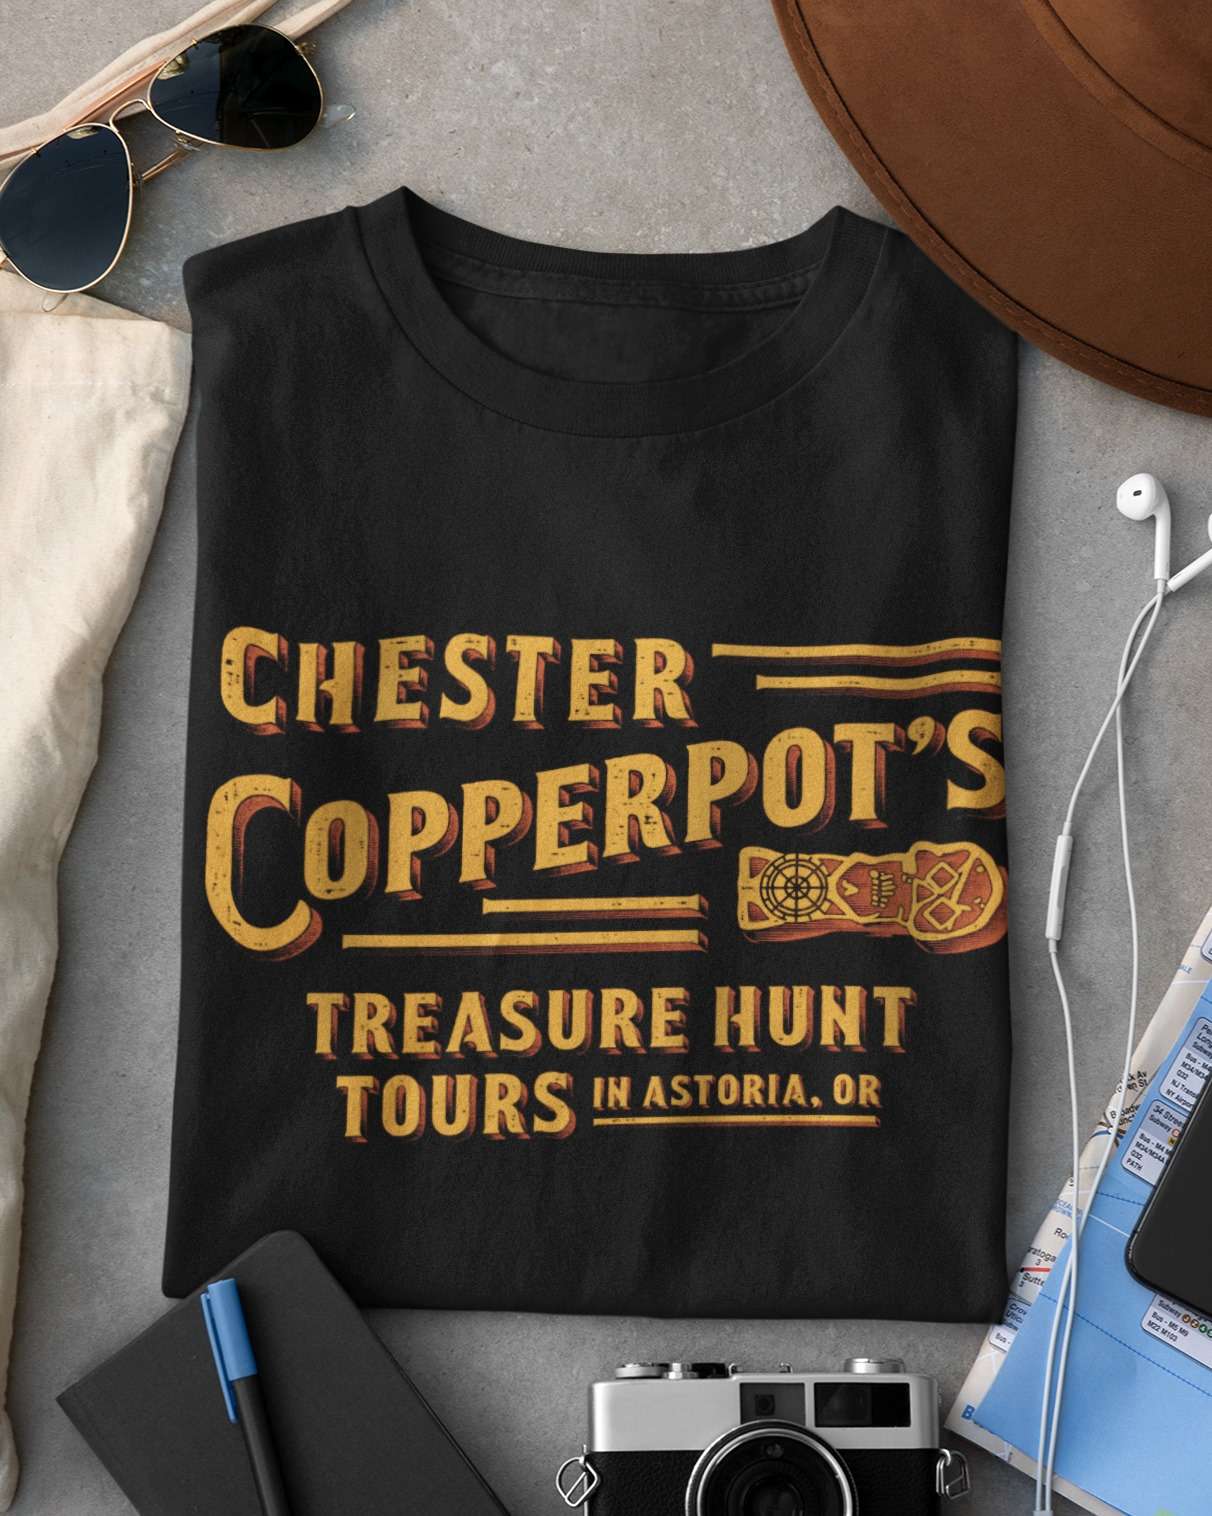 Chester copperpot's treasure hunt tour - Treasure finding tour, Chester copperpots